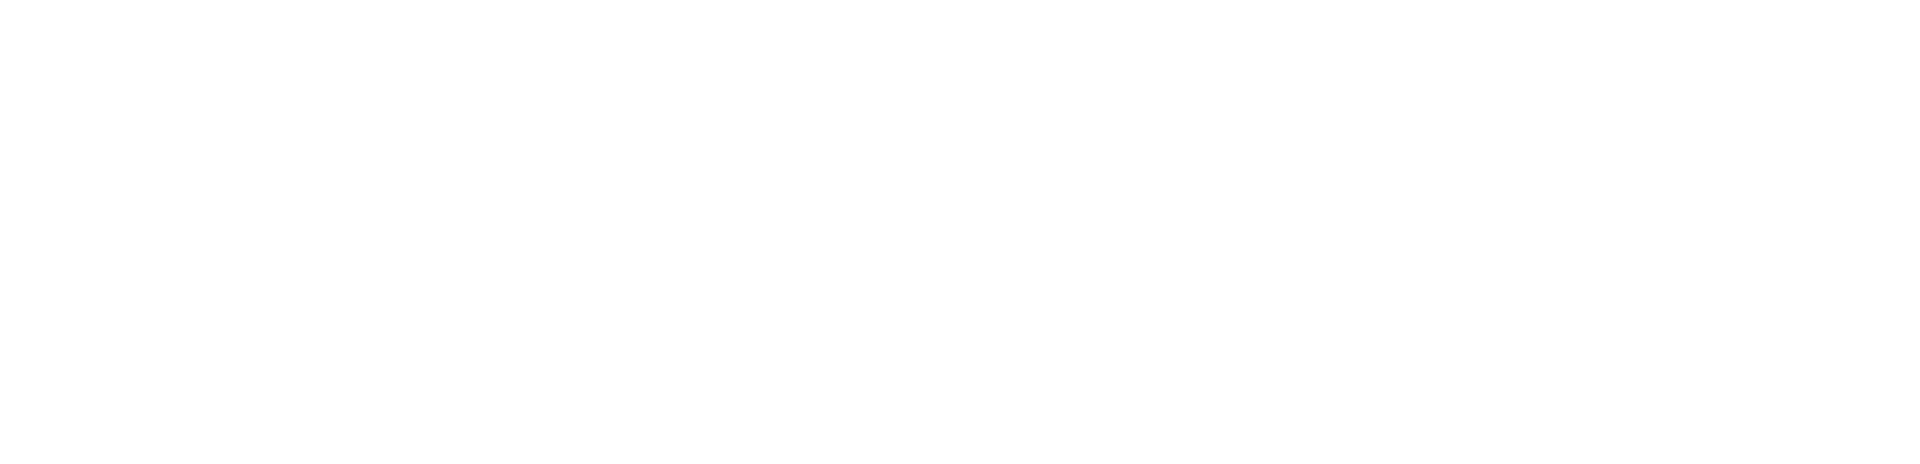 Boschman Advanced Packaging Technology logo